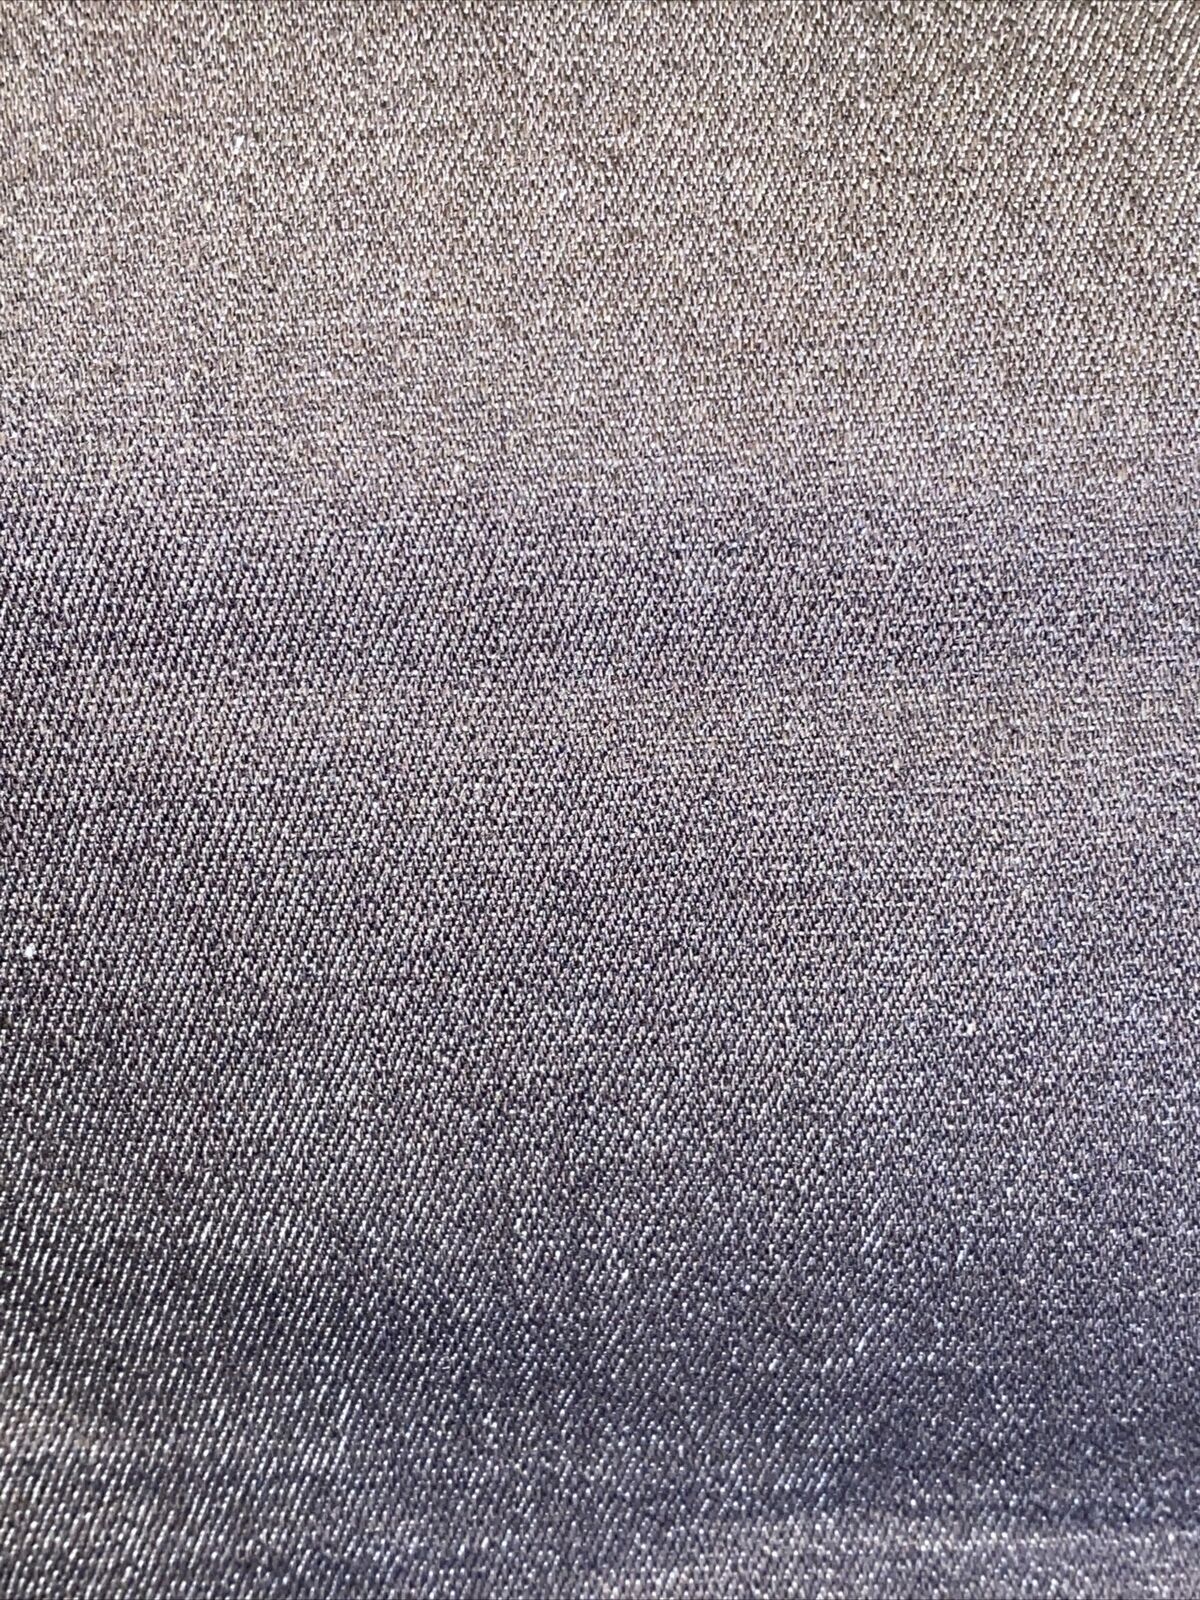 Silver Metallic Zebra Coated Grey Denim Fabric by the Yard Shiny Coated  Denim 7 Oz 98 Cotton 2 Spandex - Etsy